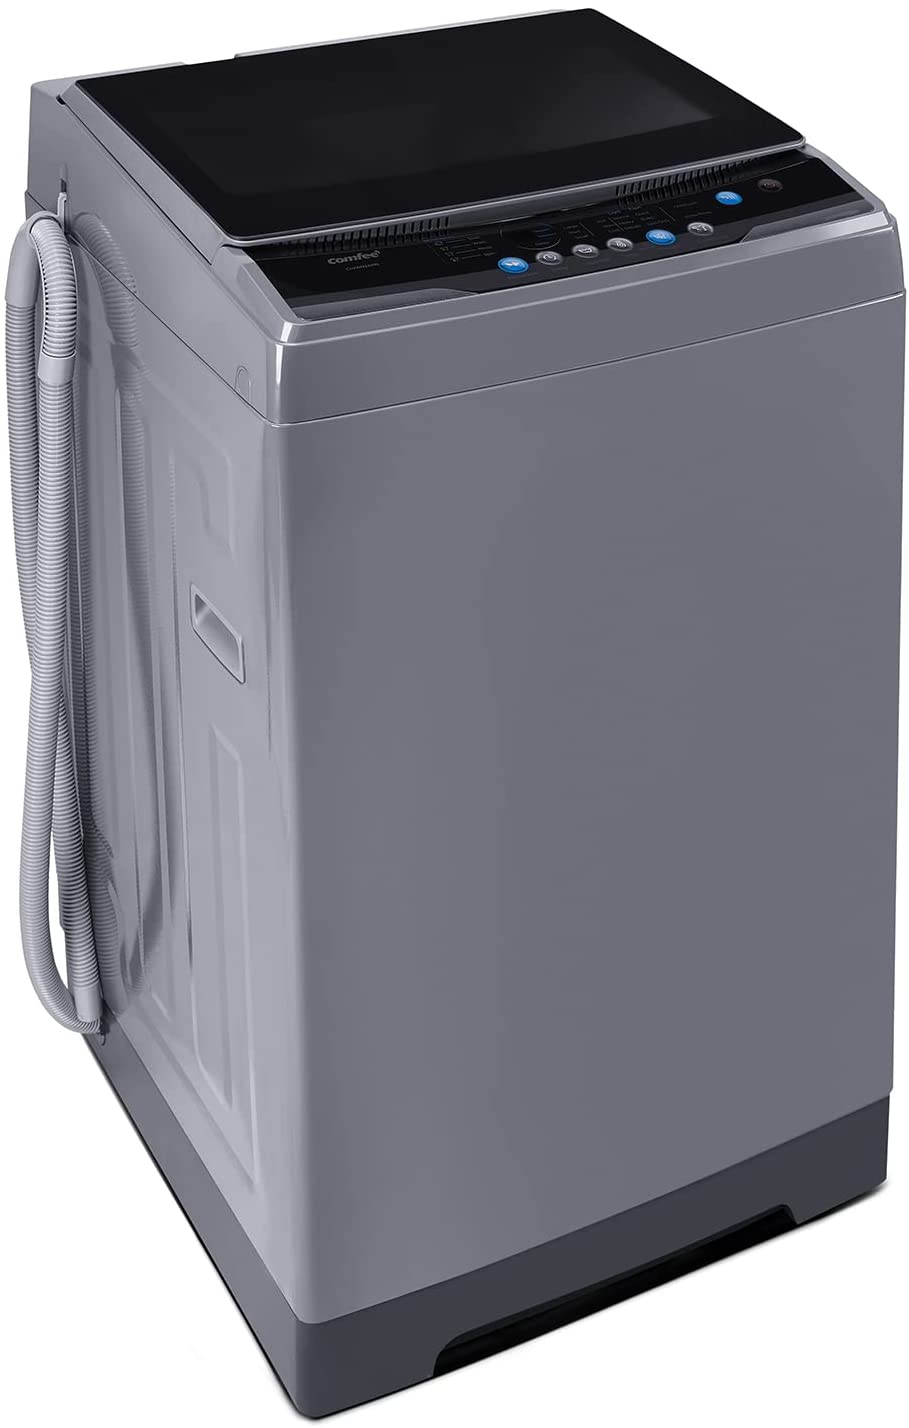 Super Deal Portable Compact Washing Machine, Mini Twin Tub Washing Machine w/Washer&Spinner, Gravity Drain Pump and Drain Hose